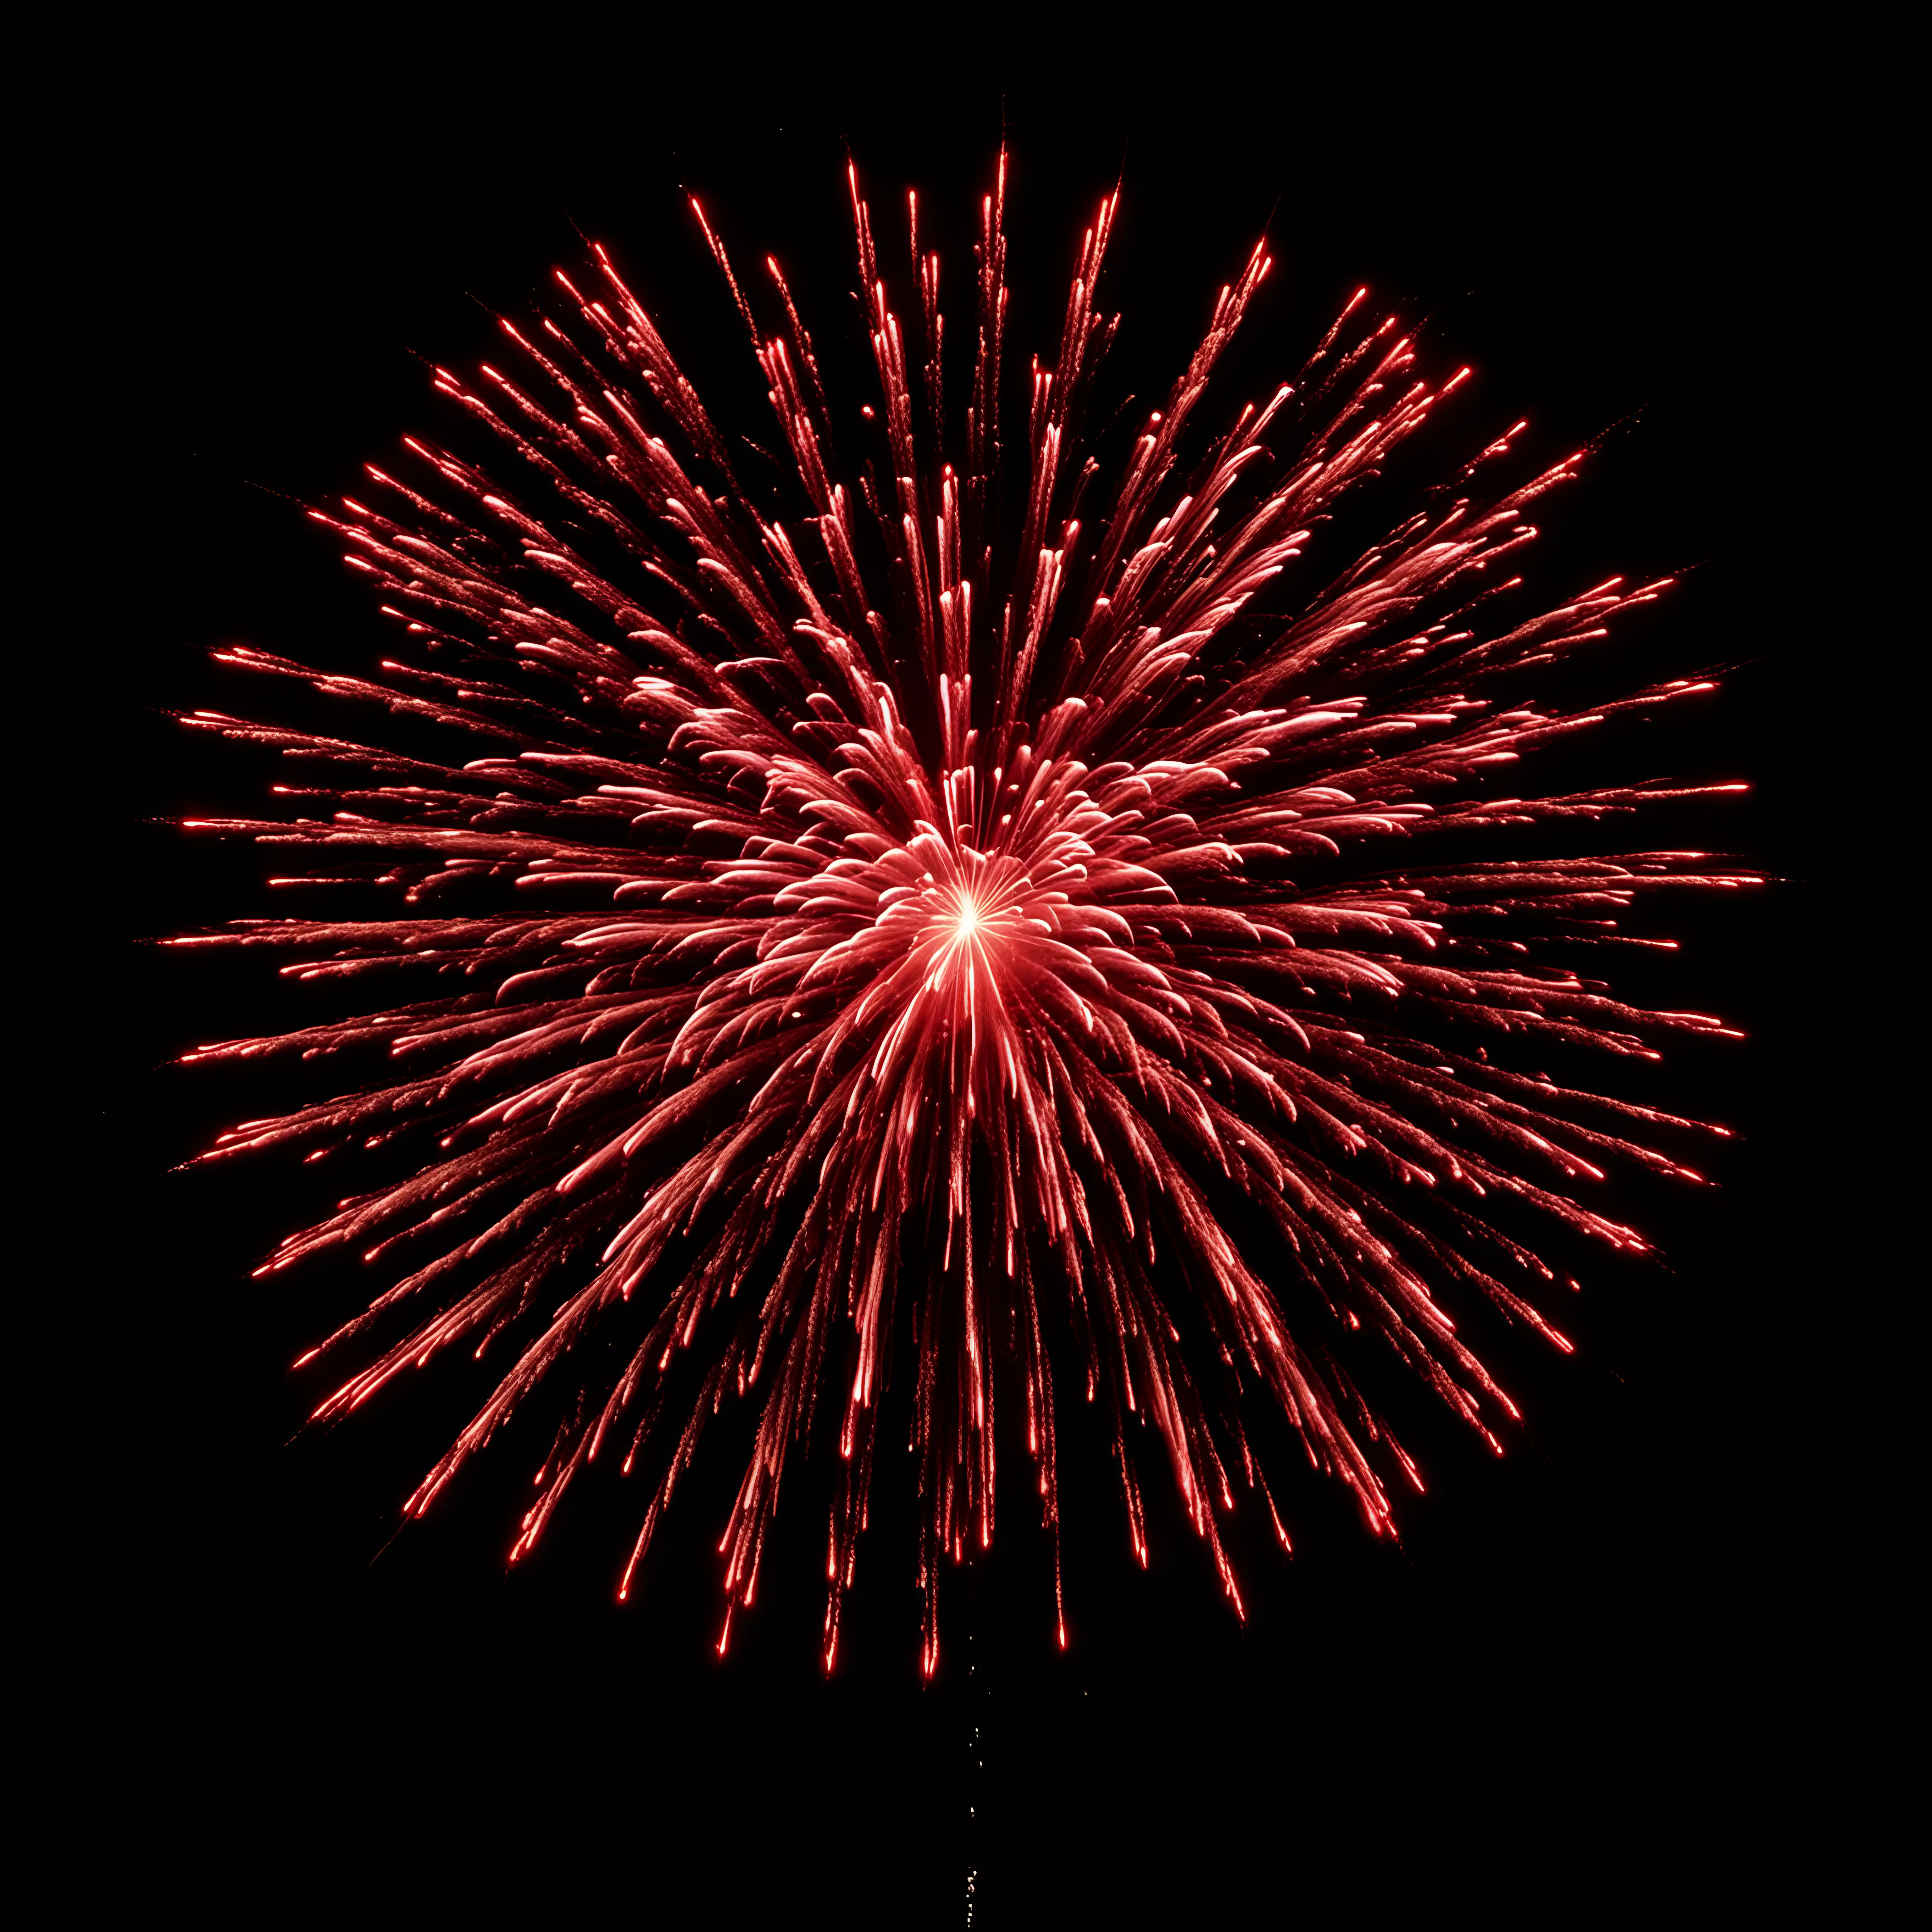 Vibrant Red Fireworks Bursting Against a Dramatic Black Sky